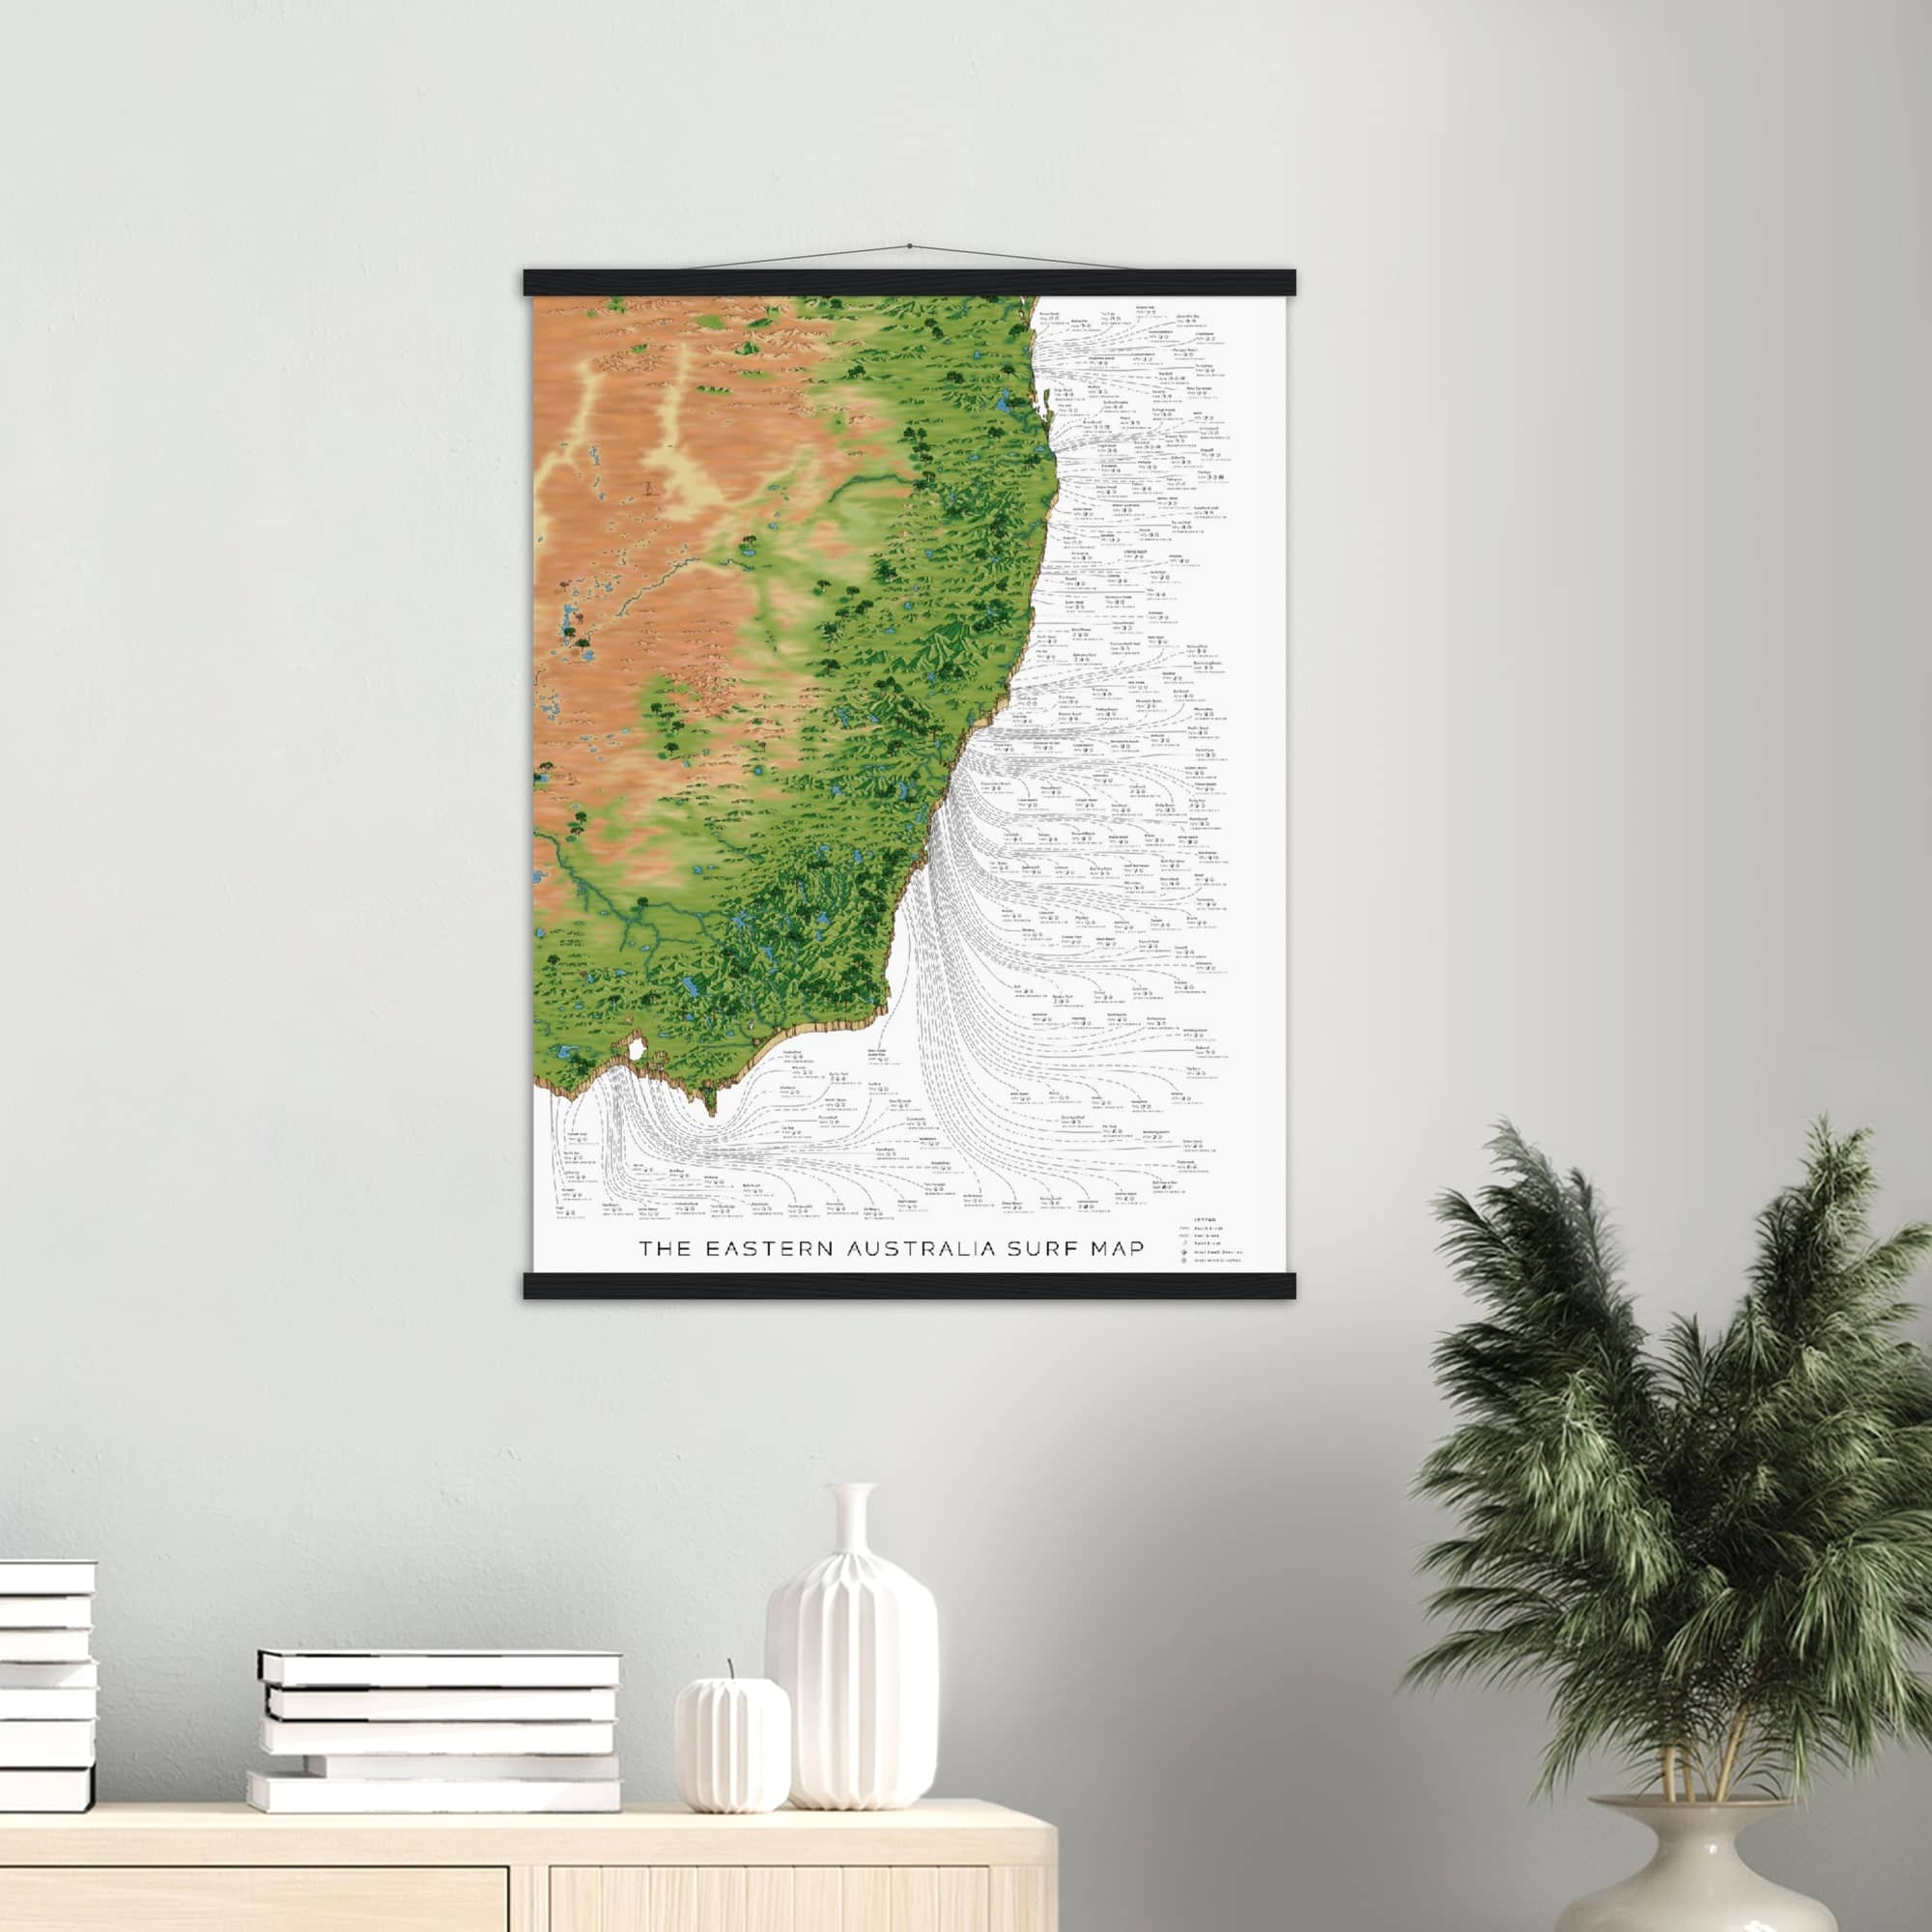 The Eastern Australia Surf Map